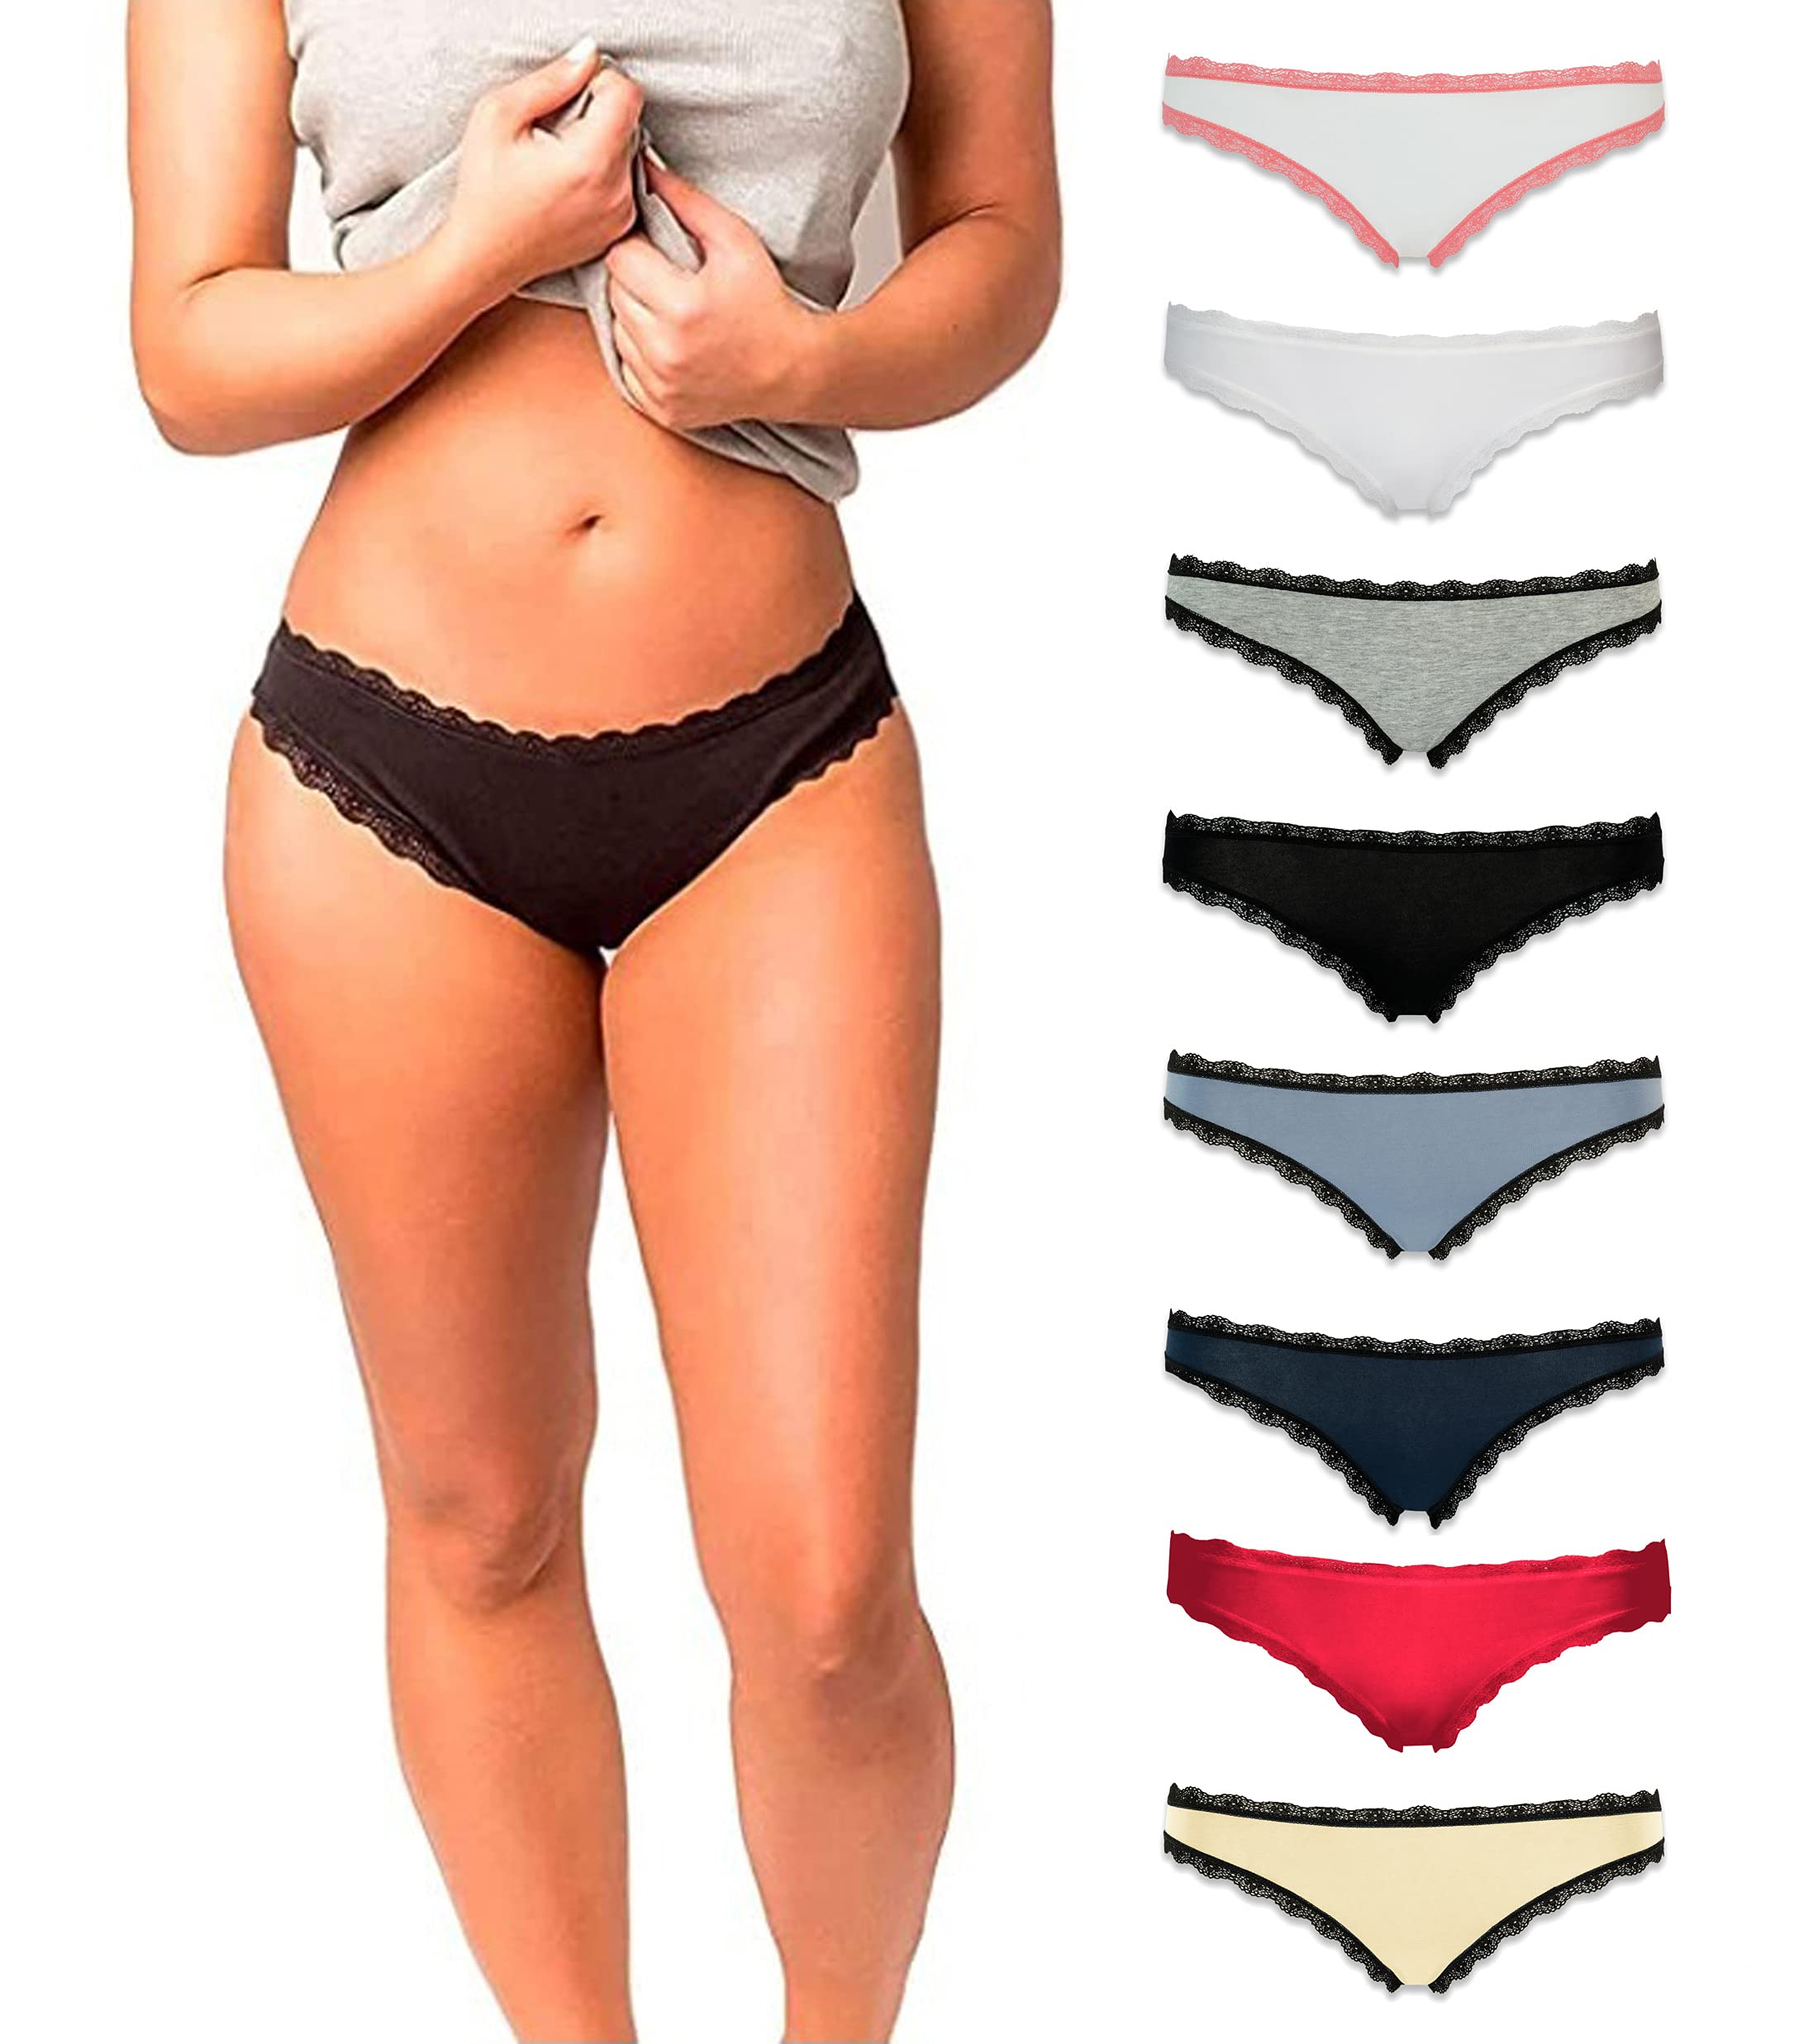 Emprella Womens Underwear Bikini Lace Panties - 8 Pack Colors and Patt